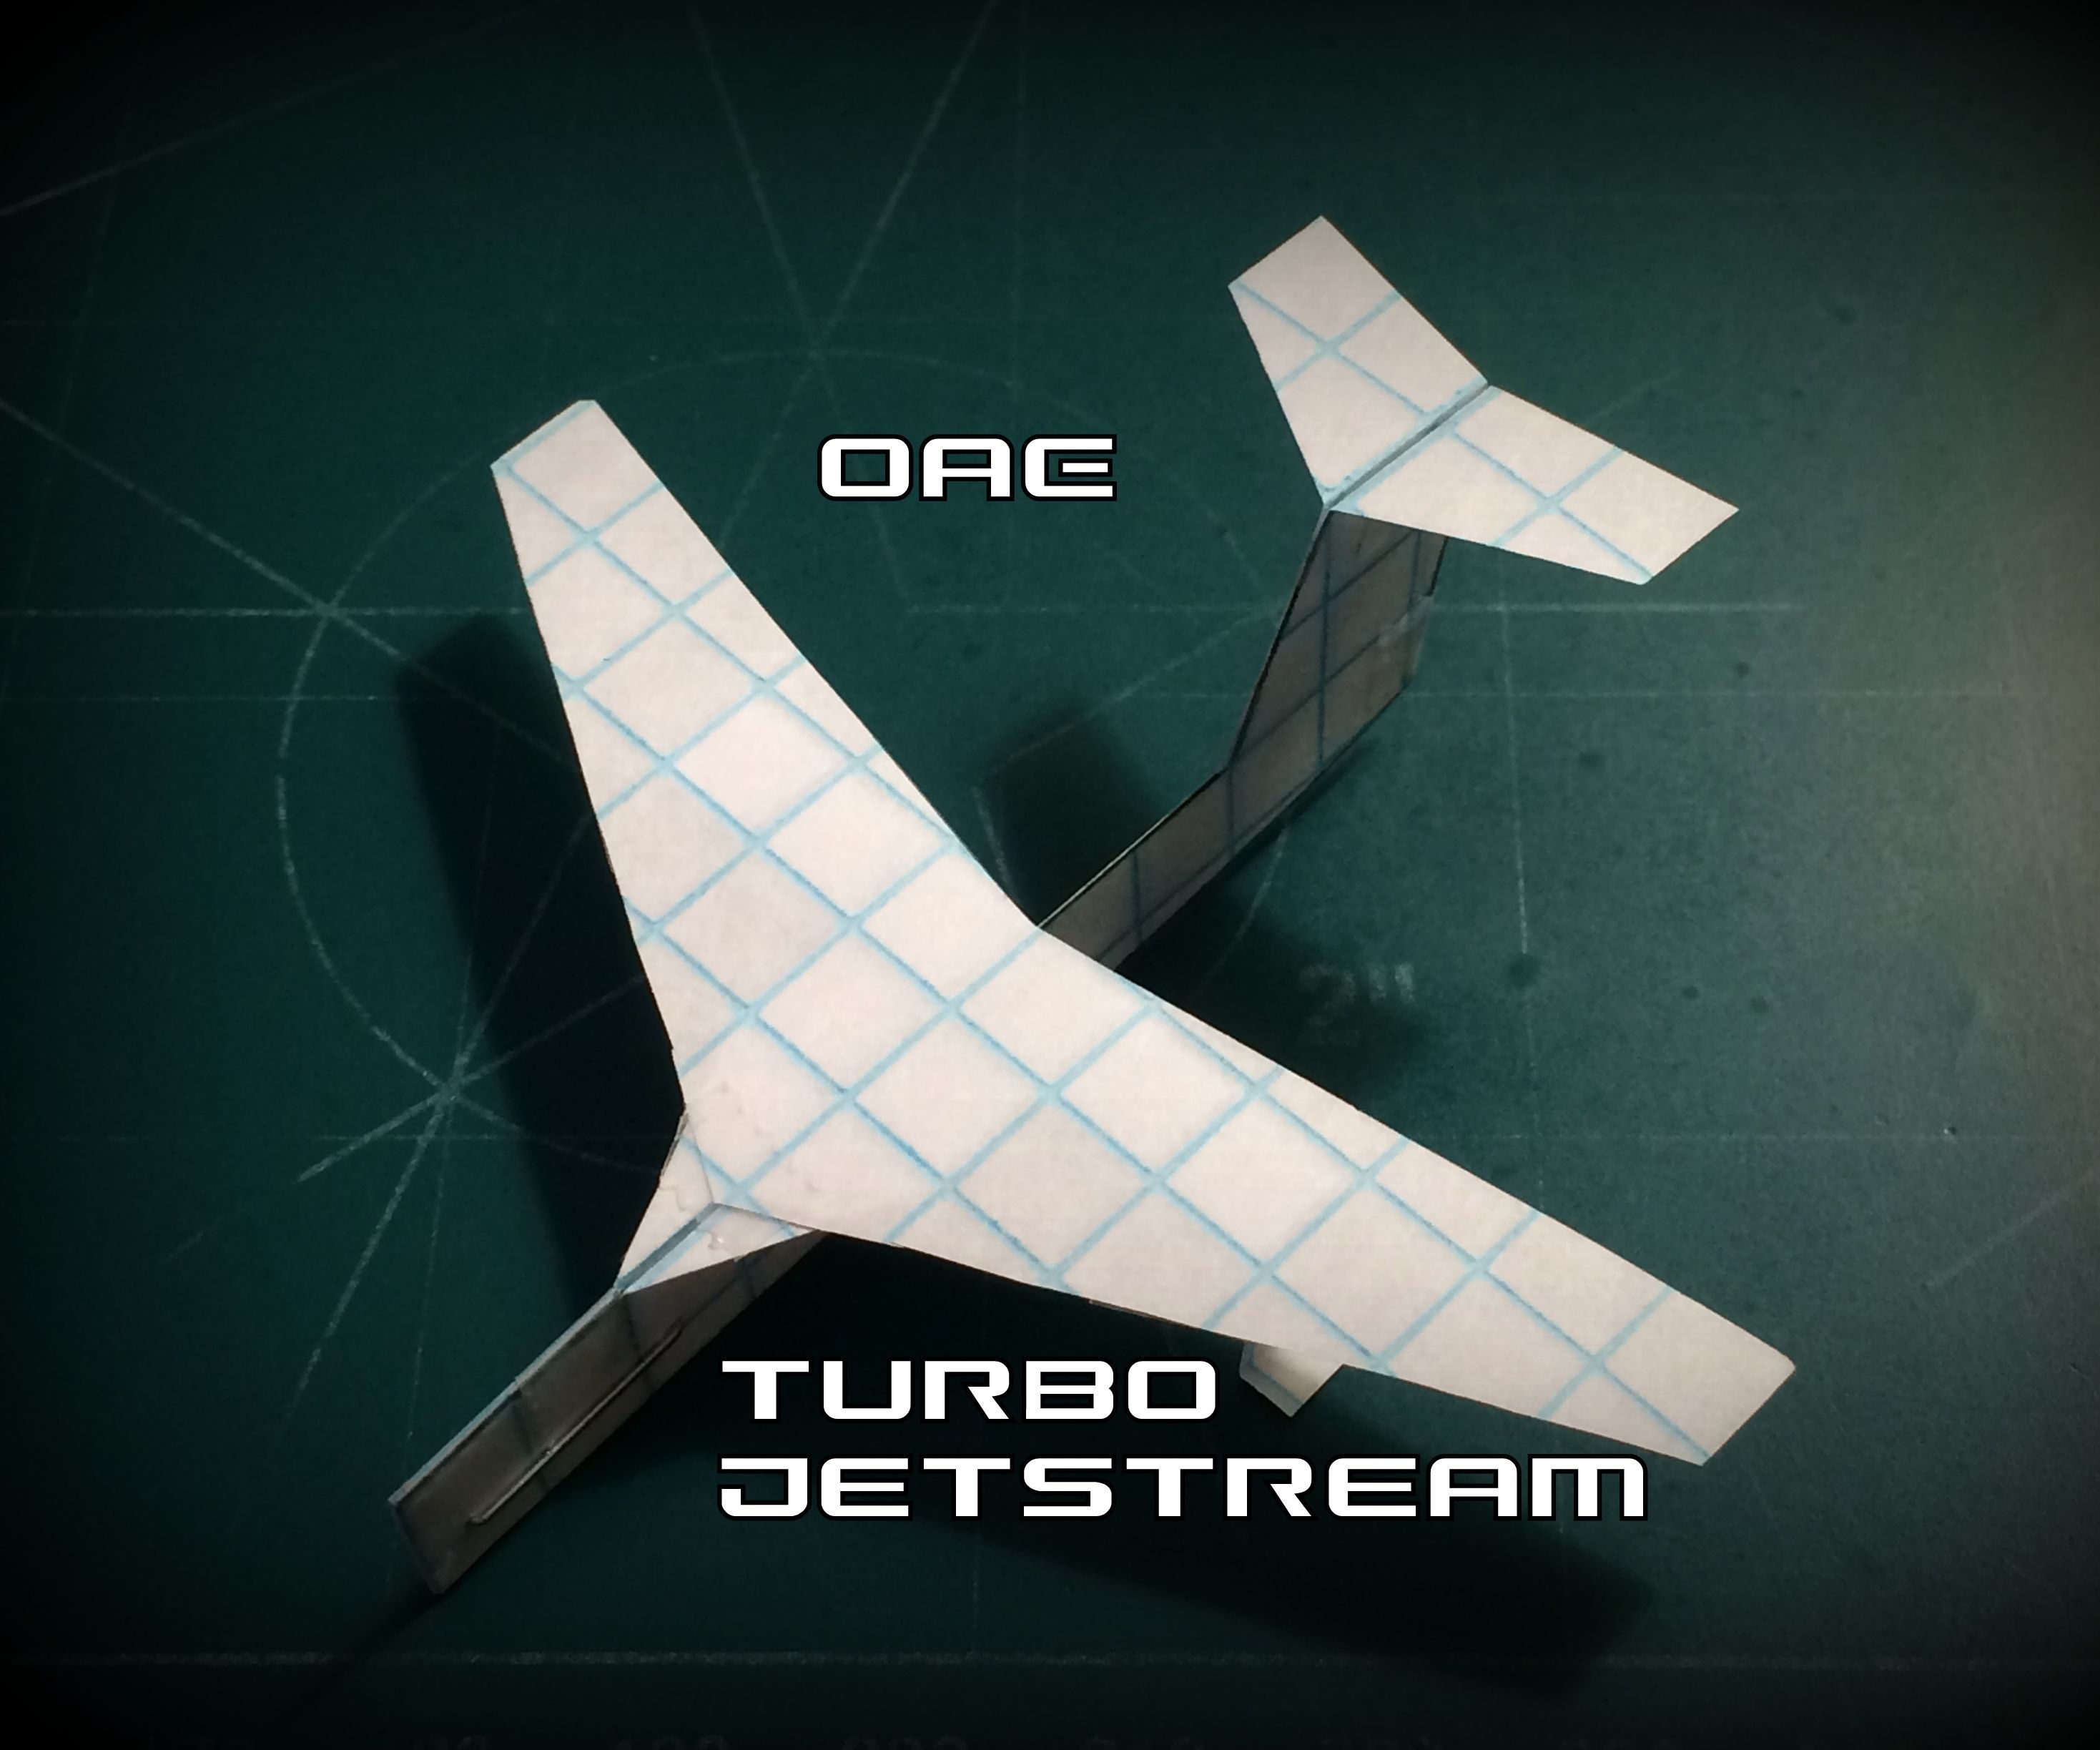 How to Make the Turbo Jetstream Paper Airplane